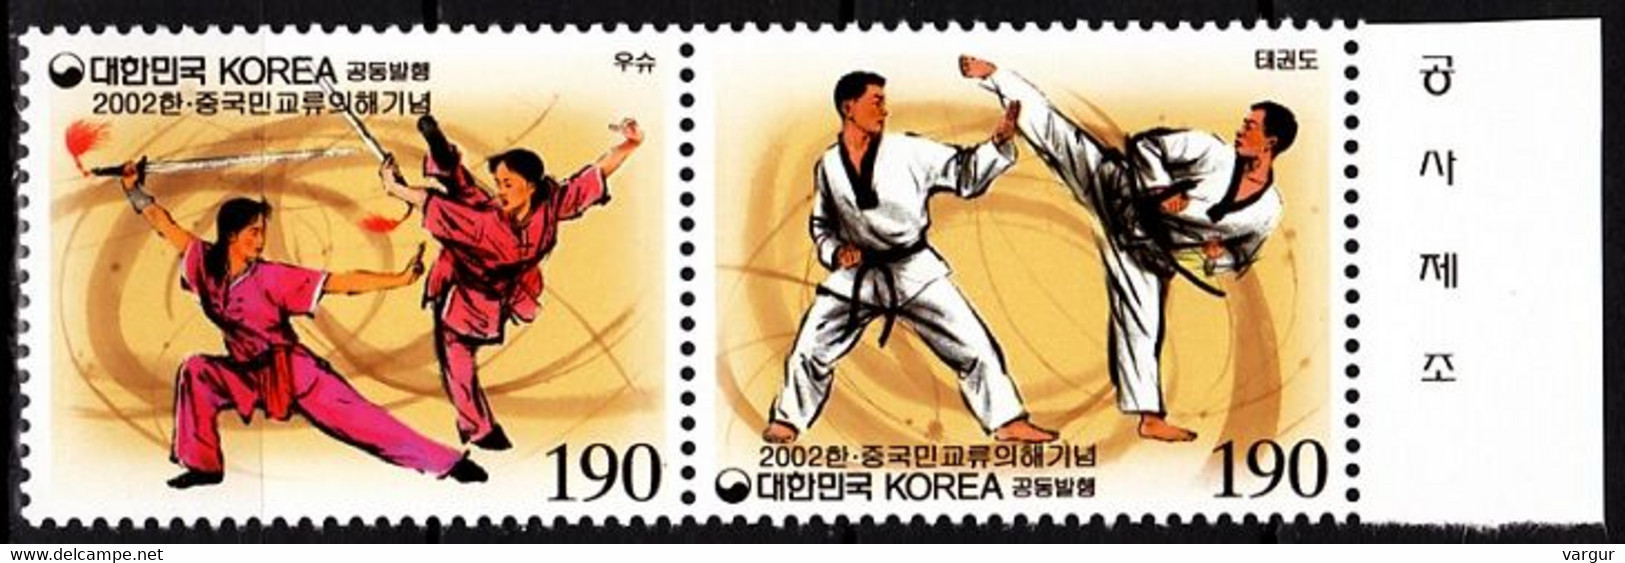 KOREA SOUTH 2002 Martial Sports: Teakwondo Kung-fu. Joint China. Pair, MNH - Emissioni Congiunte